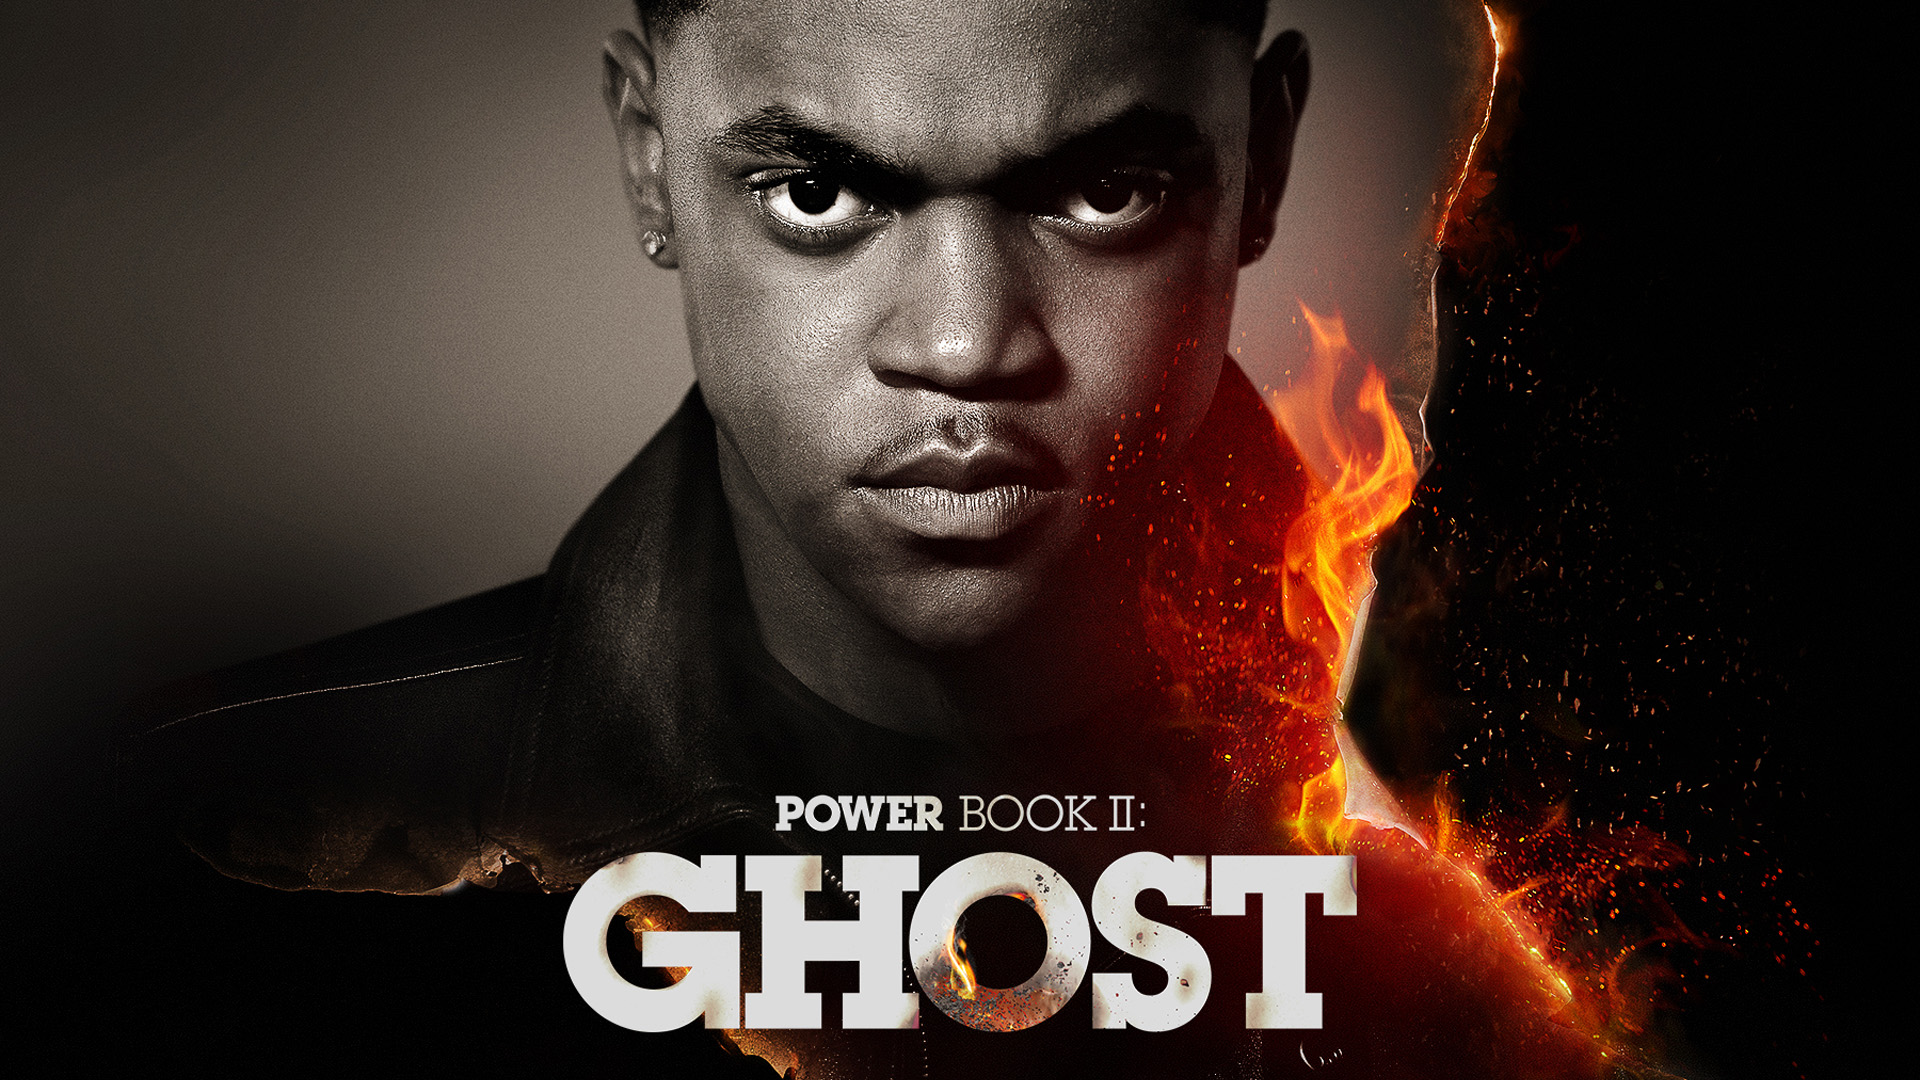 Power book II: Ghost